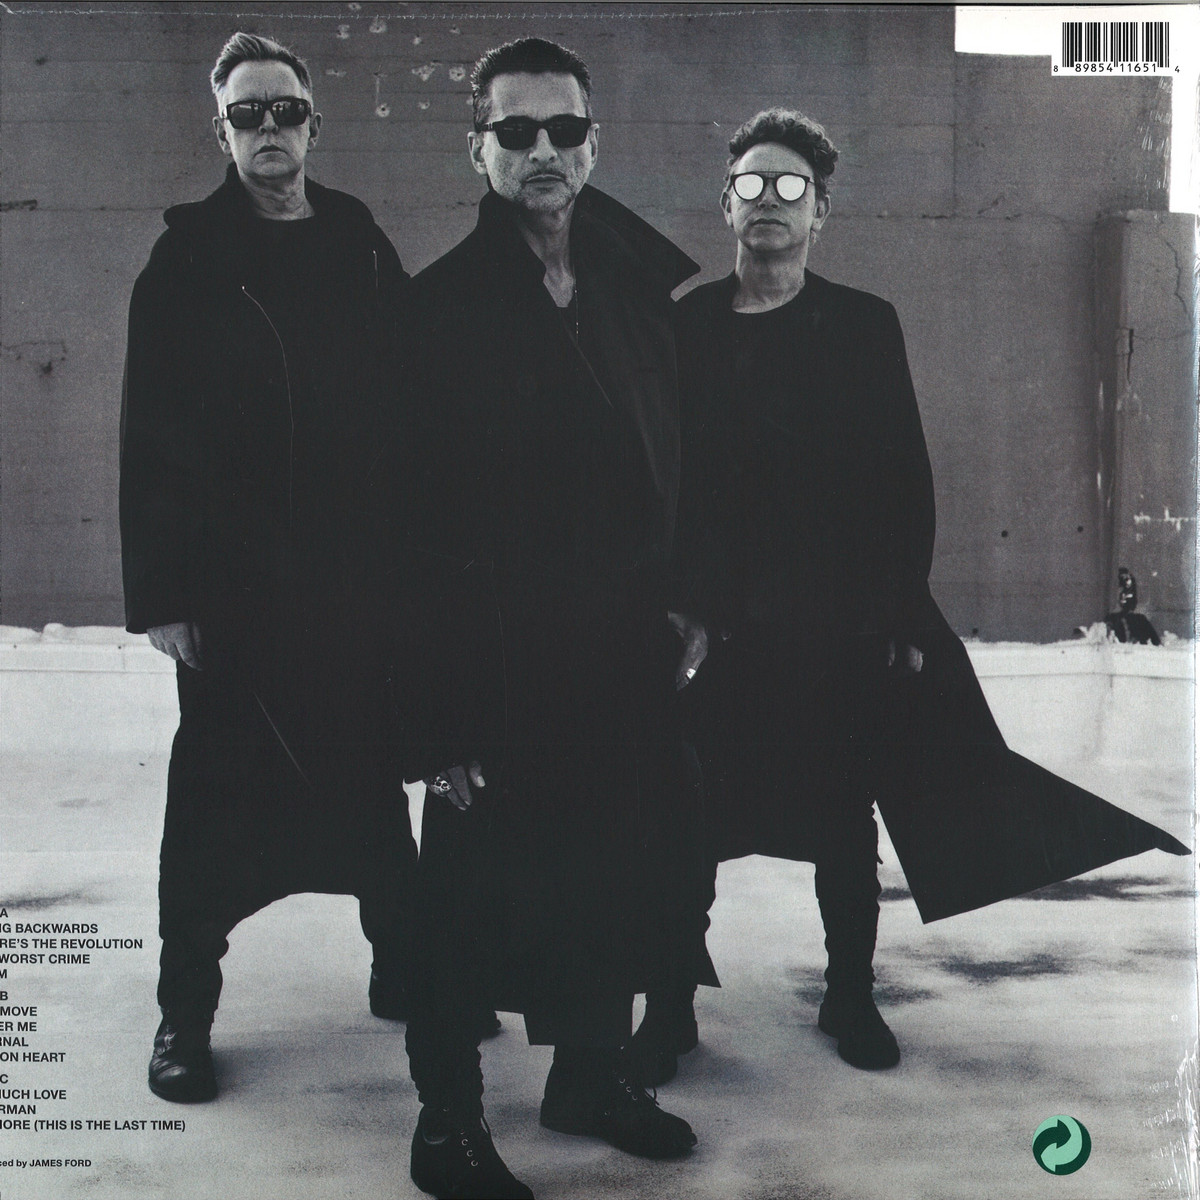 Depeche Mode - Spirit LP 2x12" / Sony UK 88985411651 - Vinyl